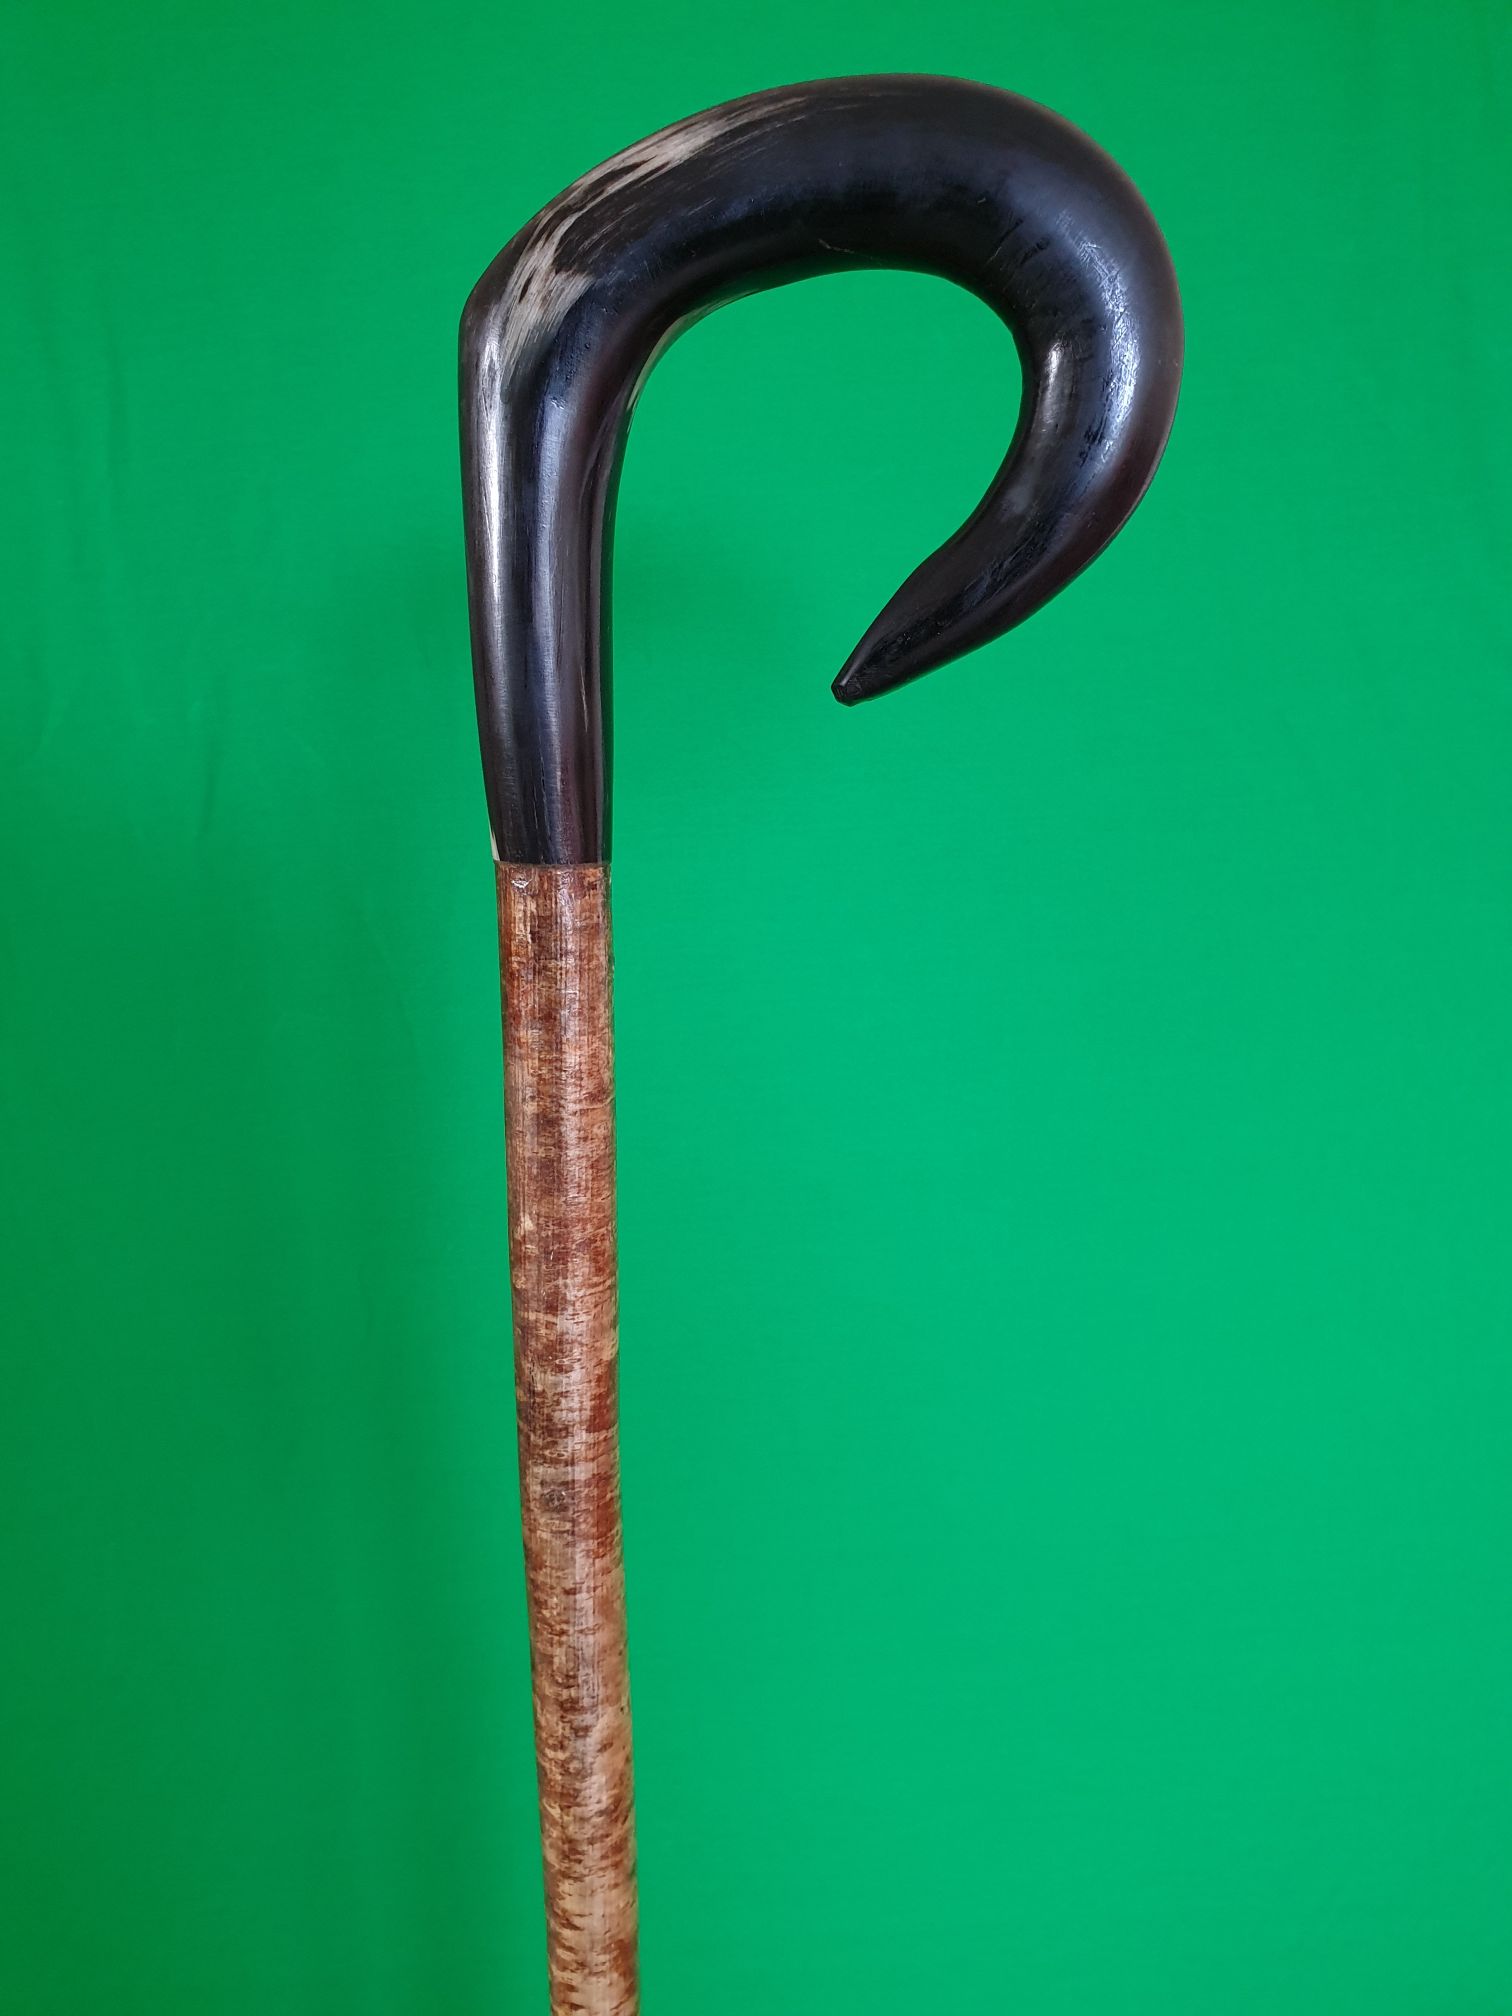 Balck Curved Handle Ramshorn walking stick